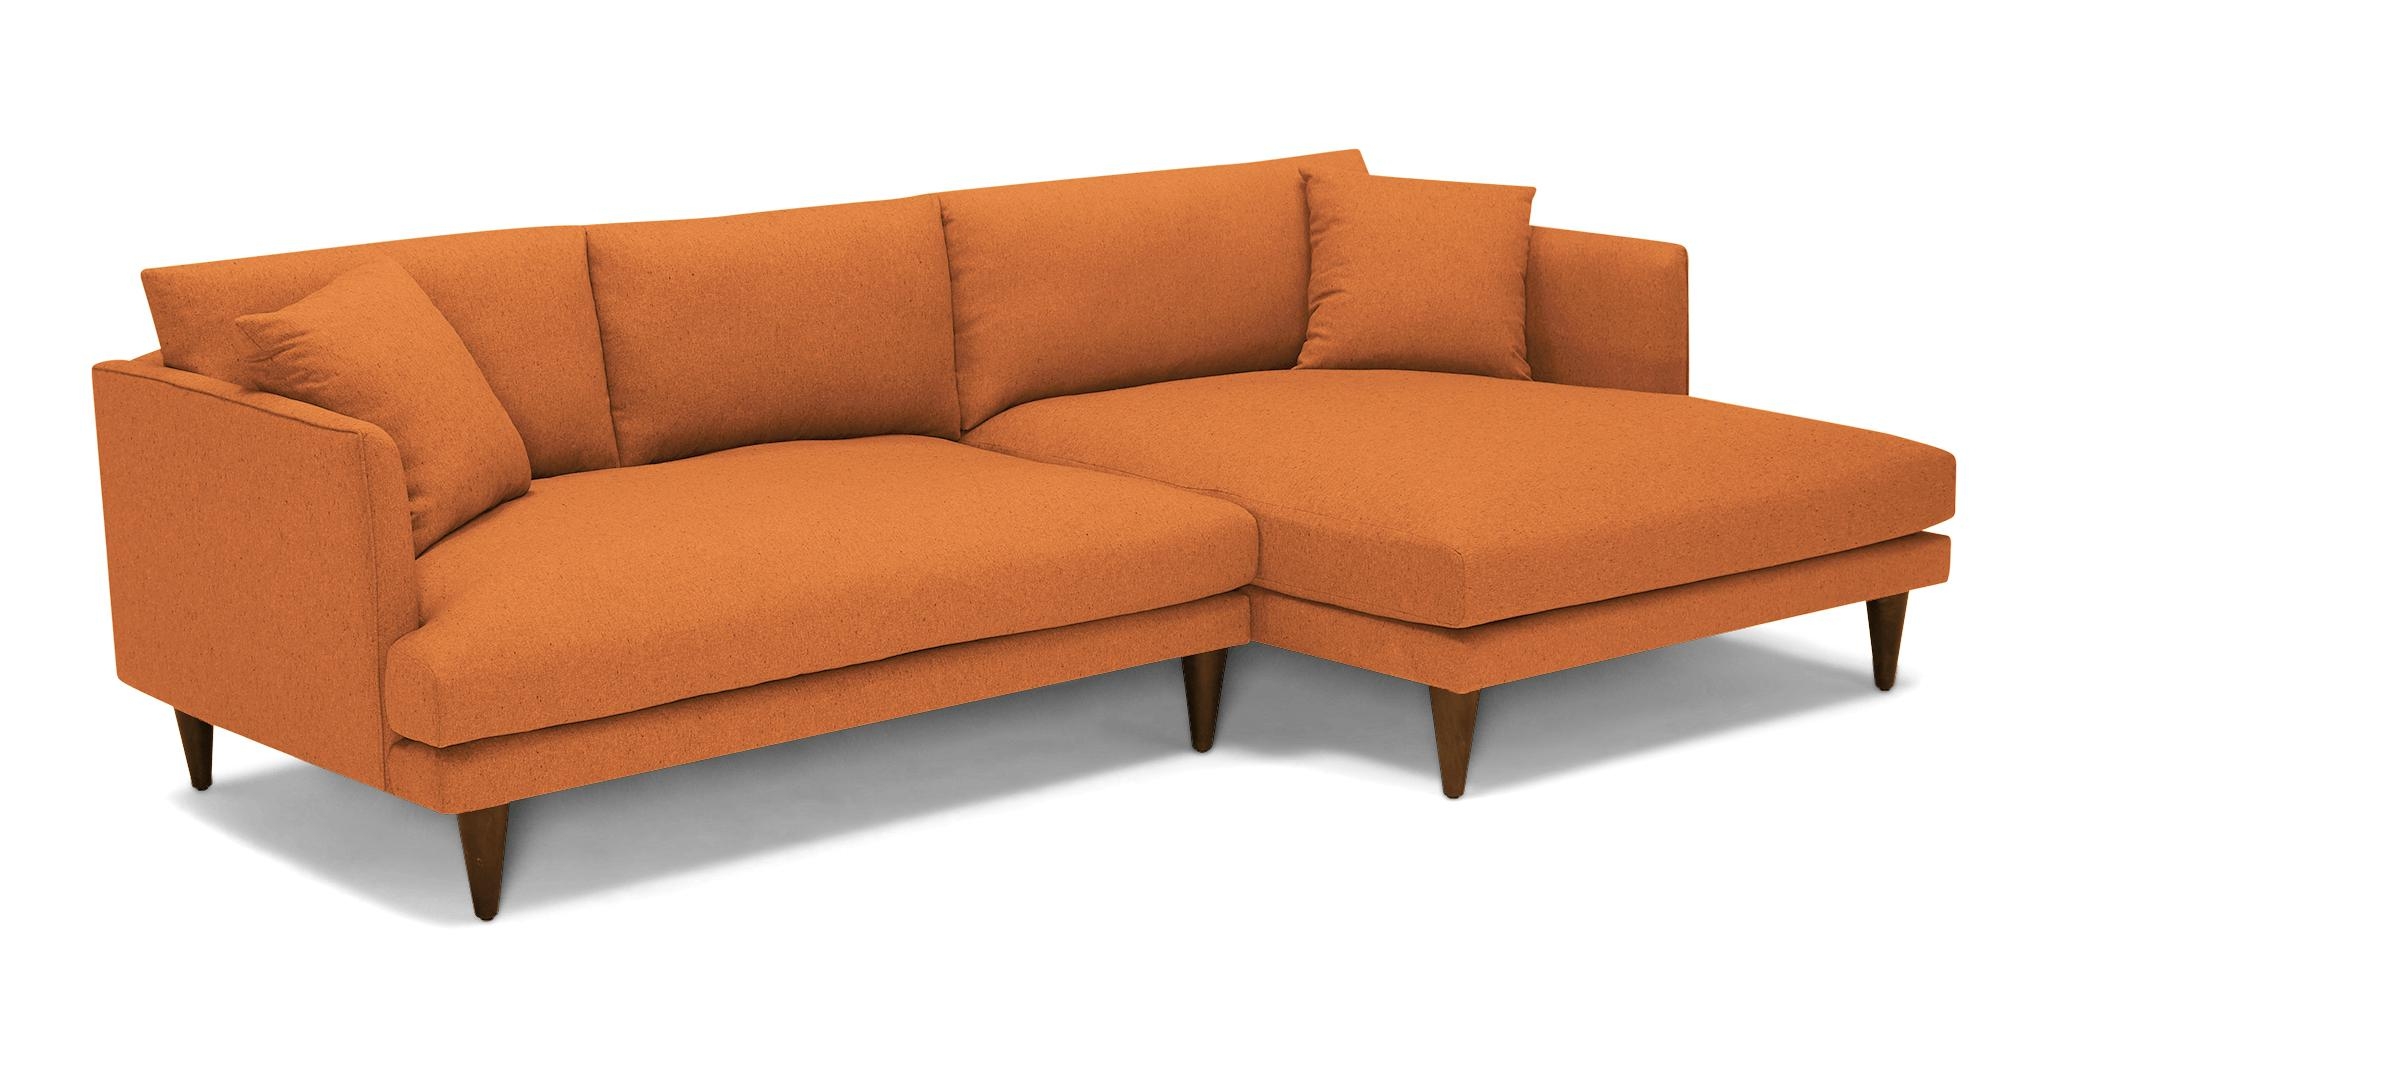 Orange Lewis Mid Century Modern Sectional - Vibe Sunkist - Mocha - Right - Cone - Image 1